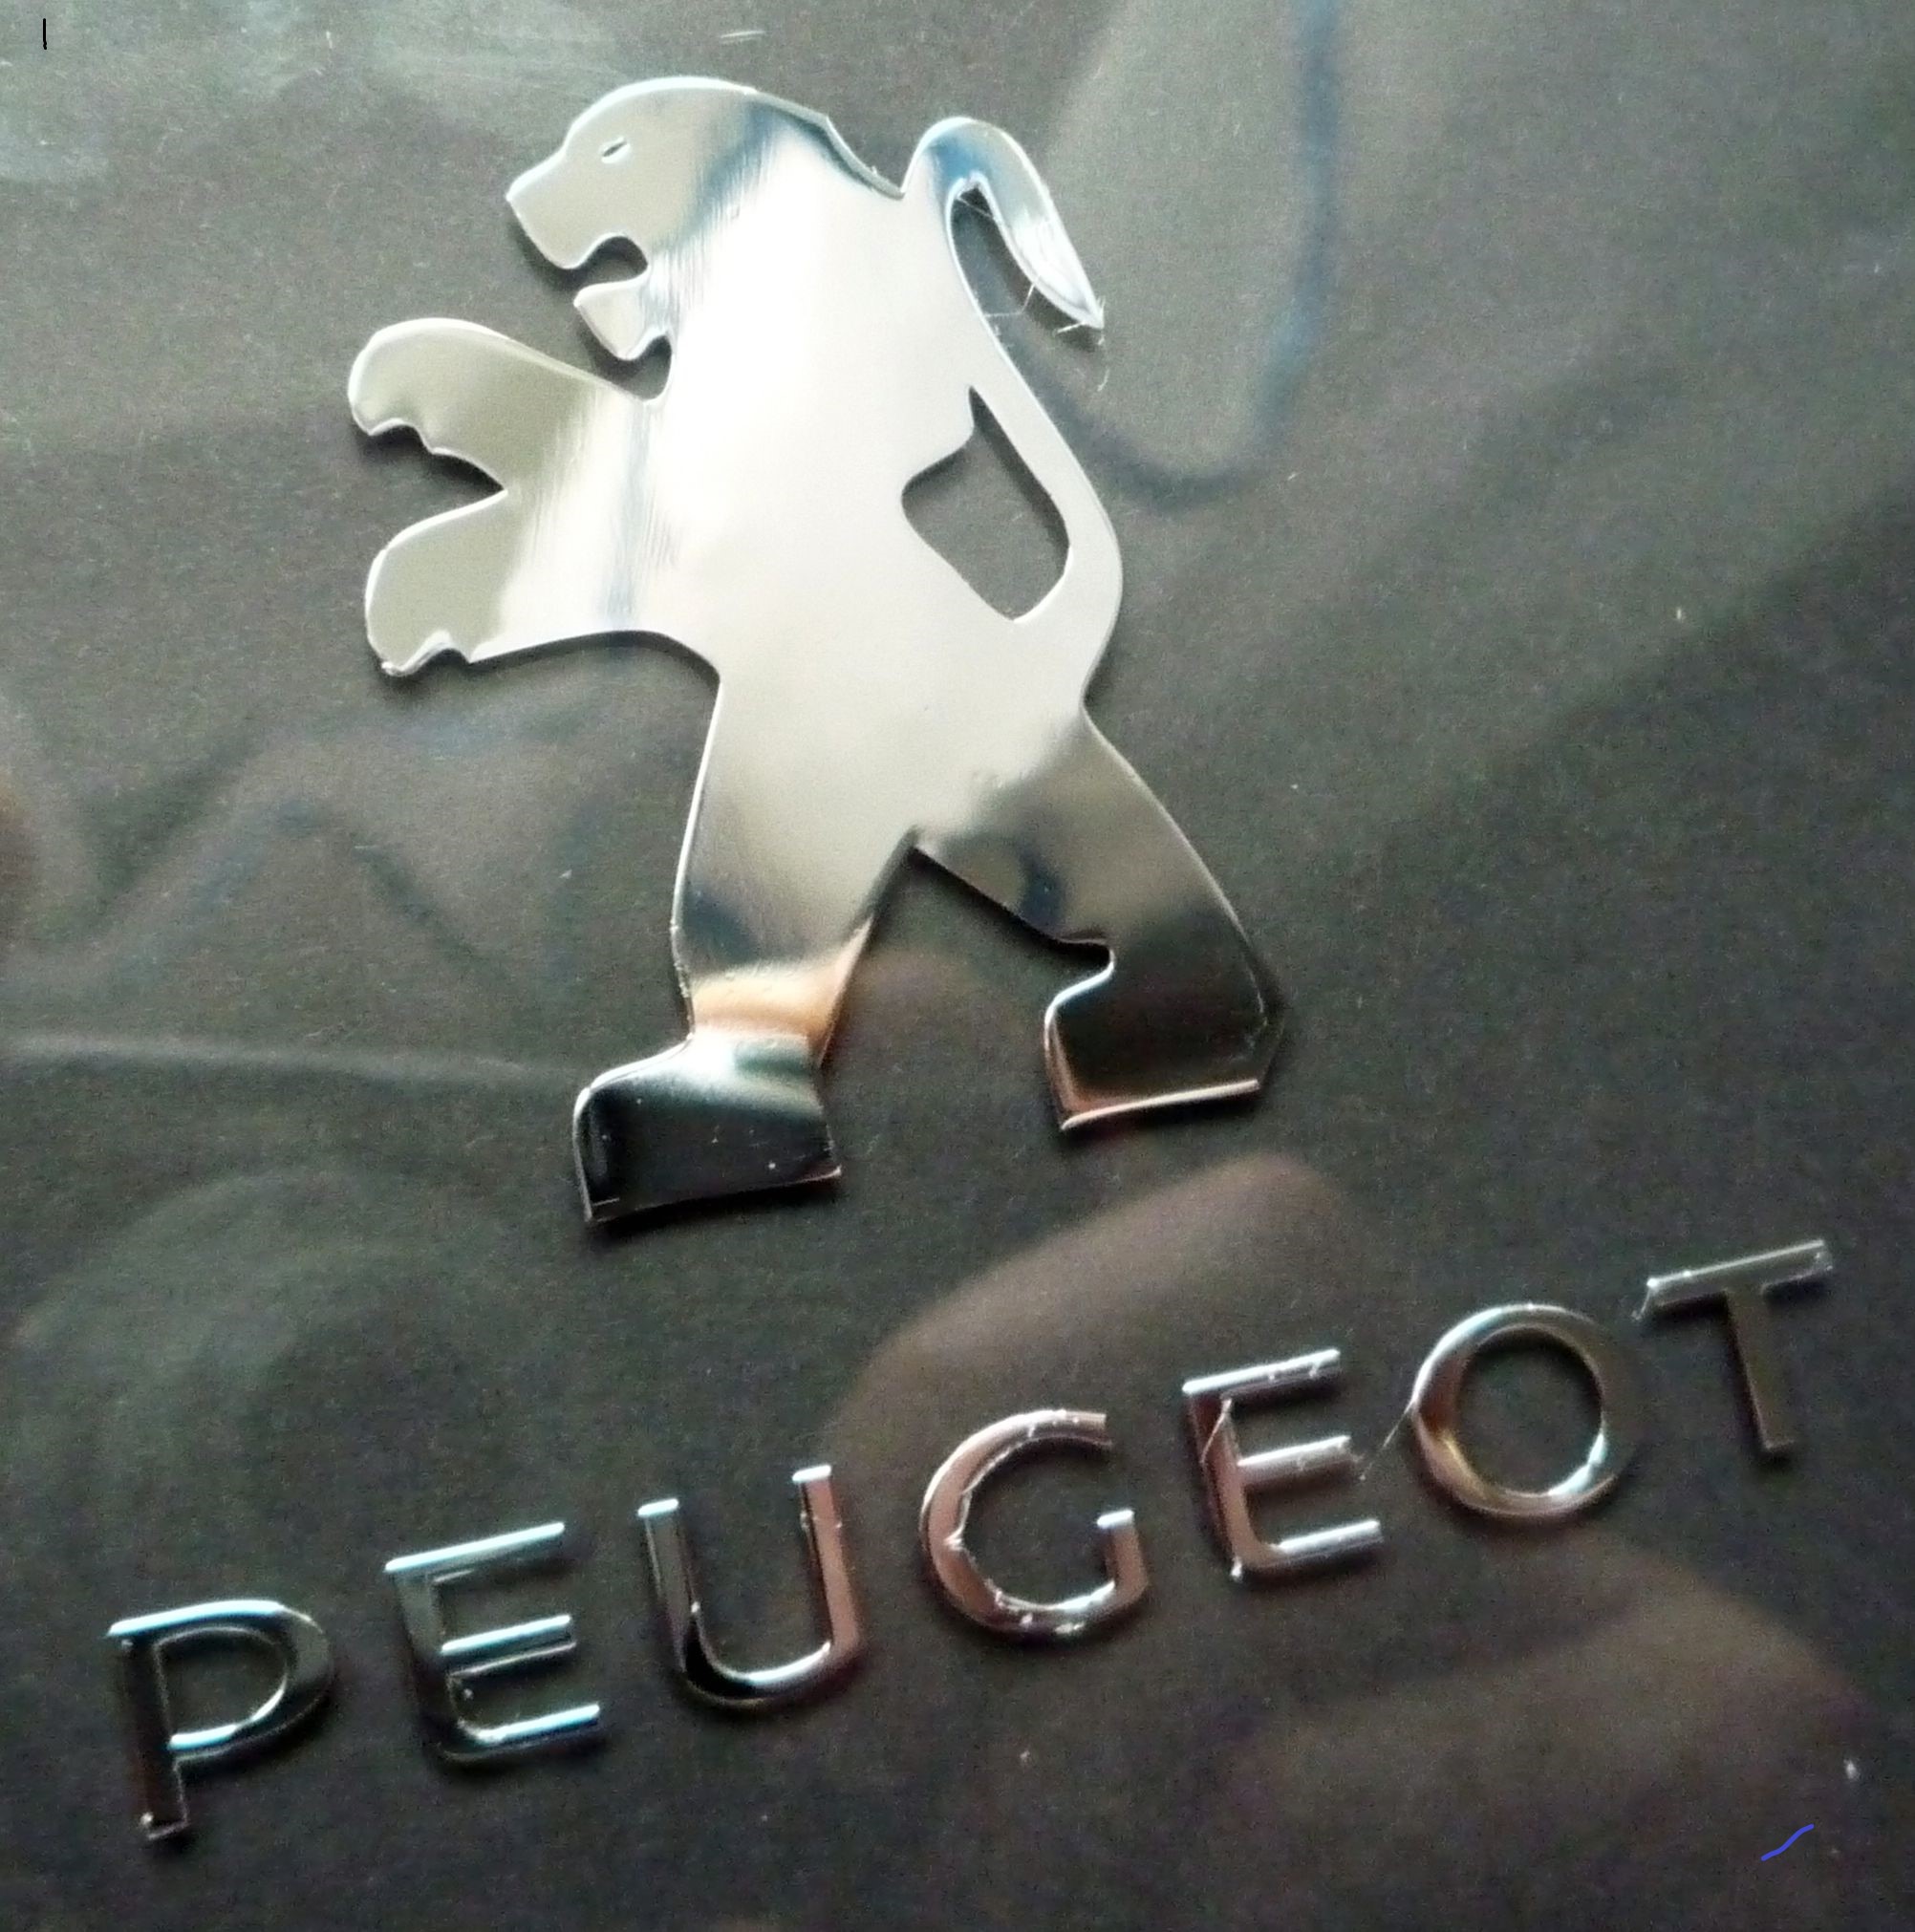 PEUGEOT LOGO nalepka Metal Edition